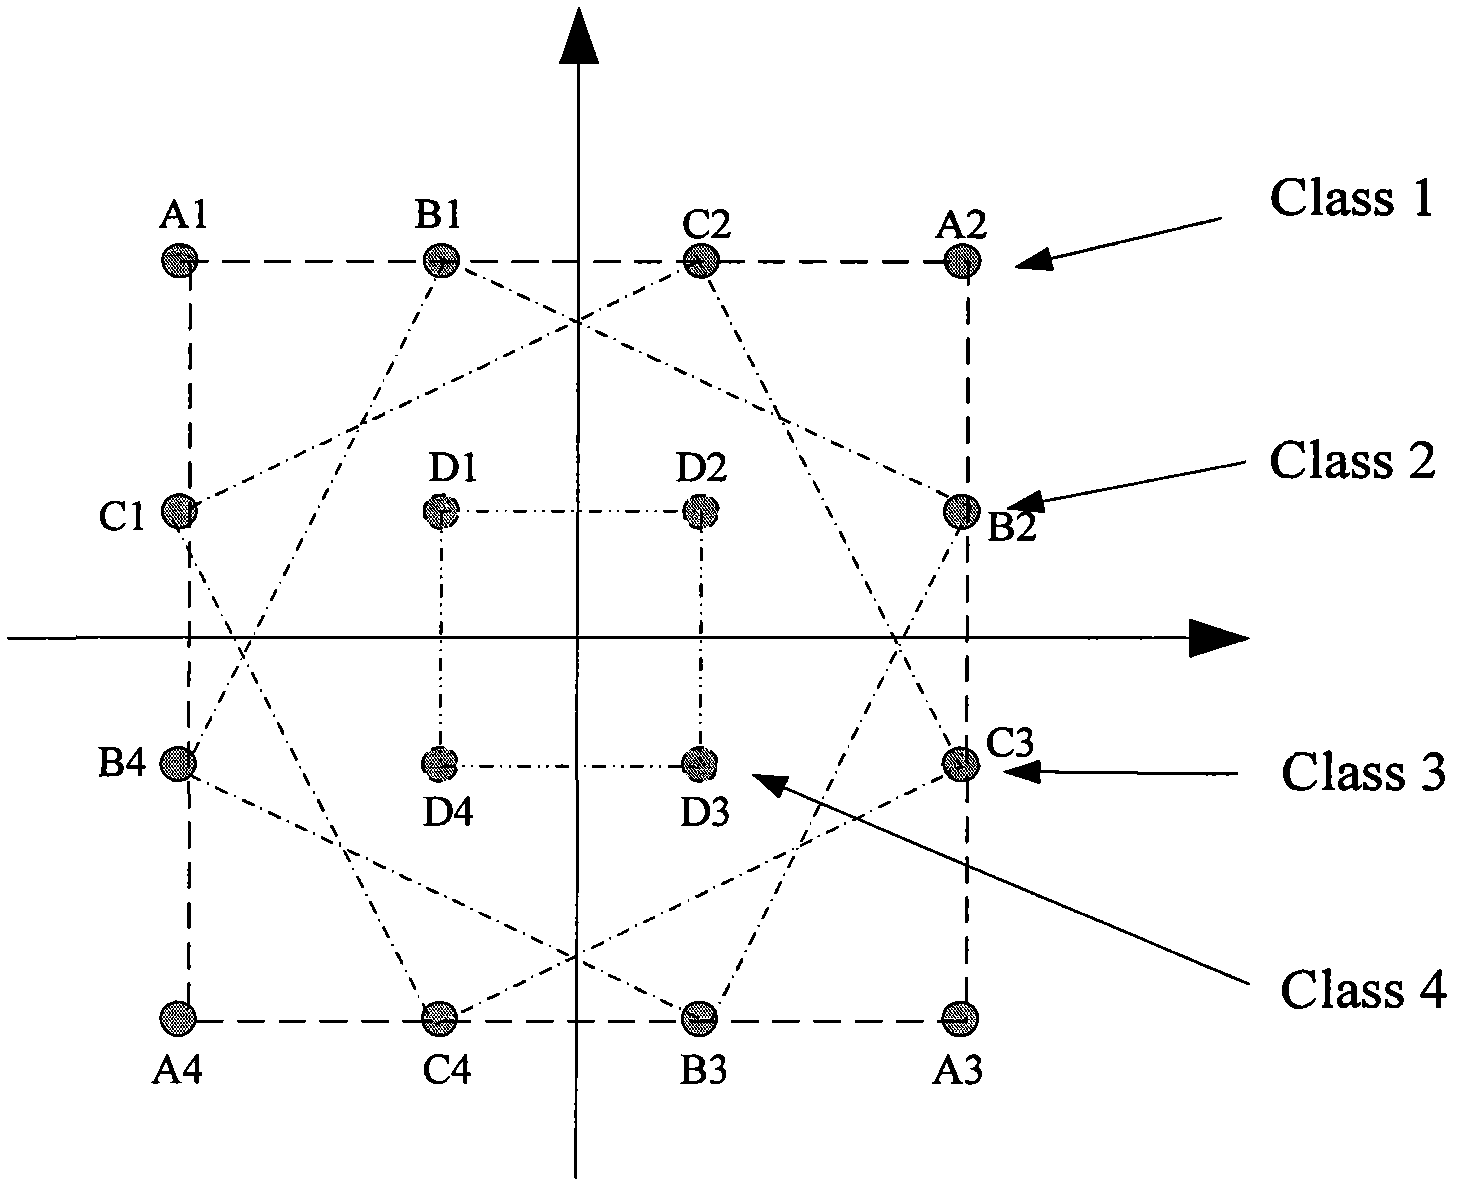 Carrier phase correcting method for QAM modulation